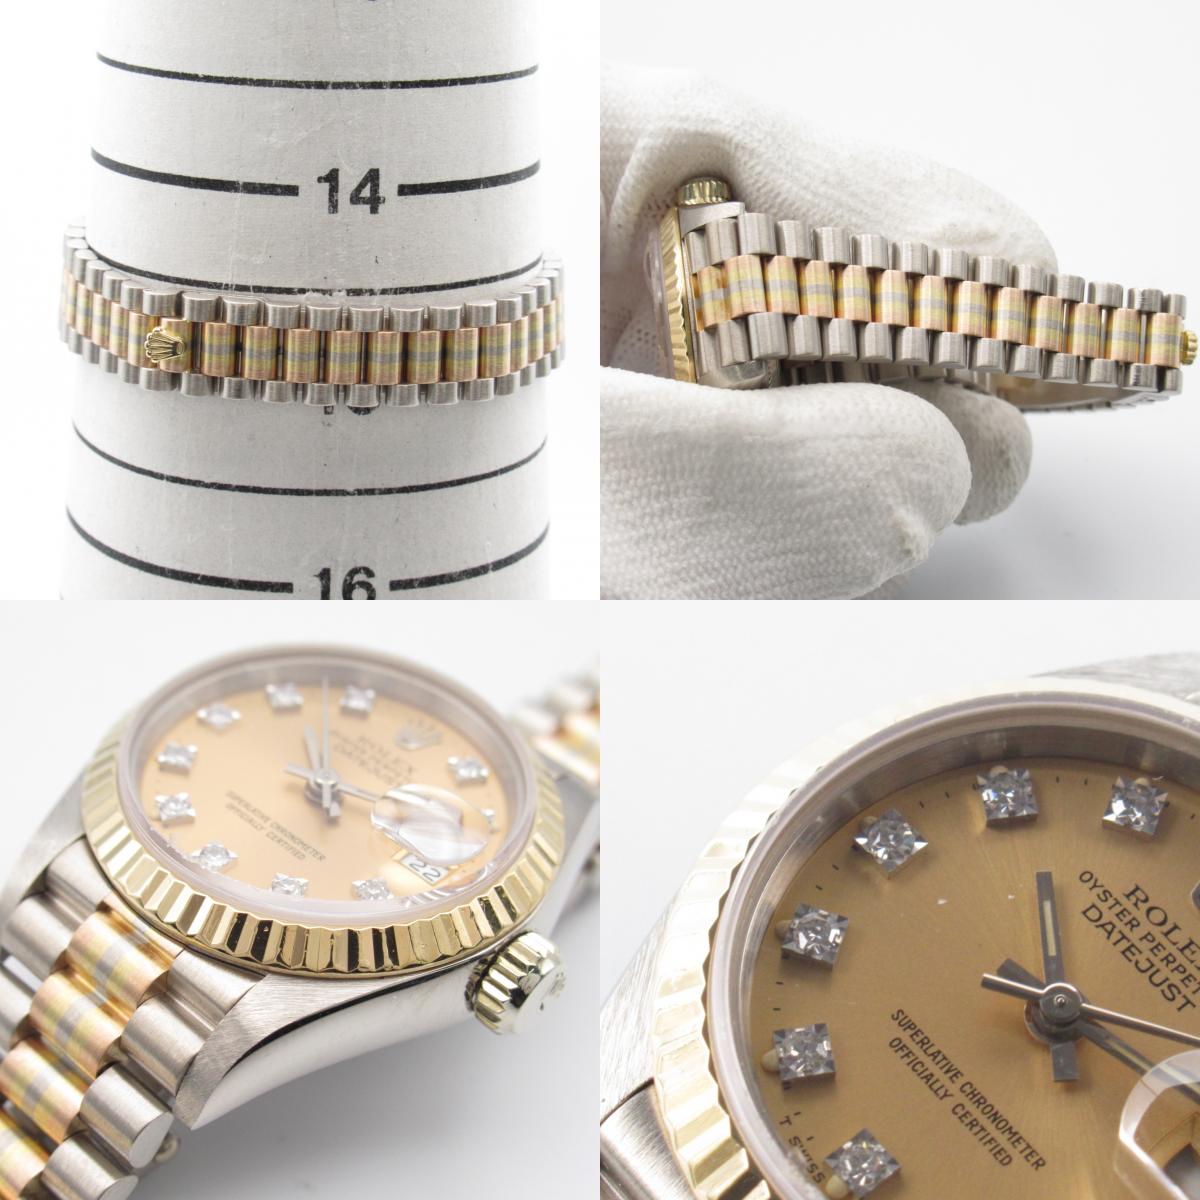 Rolex Rolex Datejust 10P Diamond Nonene. 9 Armband Watch K18WG (White G) Triple G  Gold  CH/QP/Tridore 69179G BIC